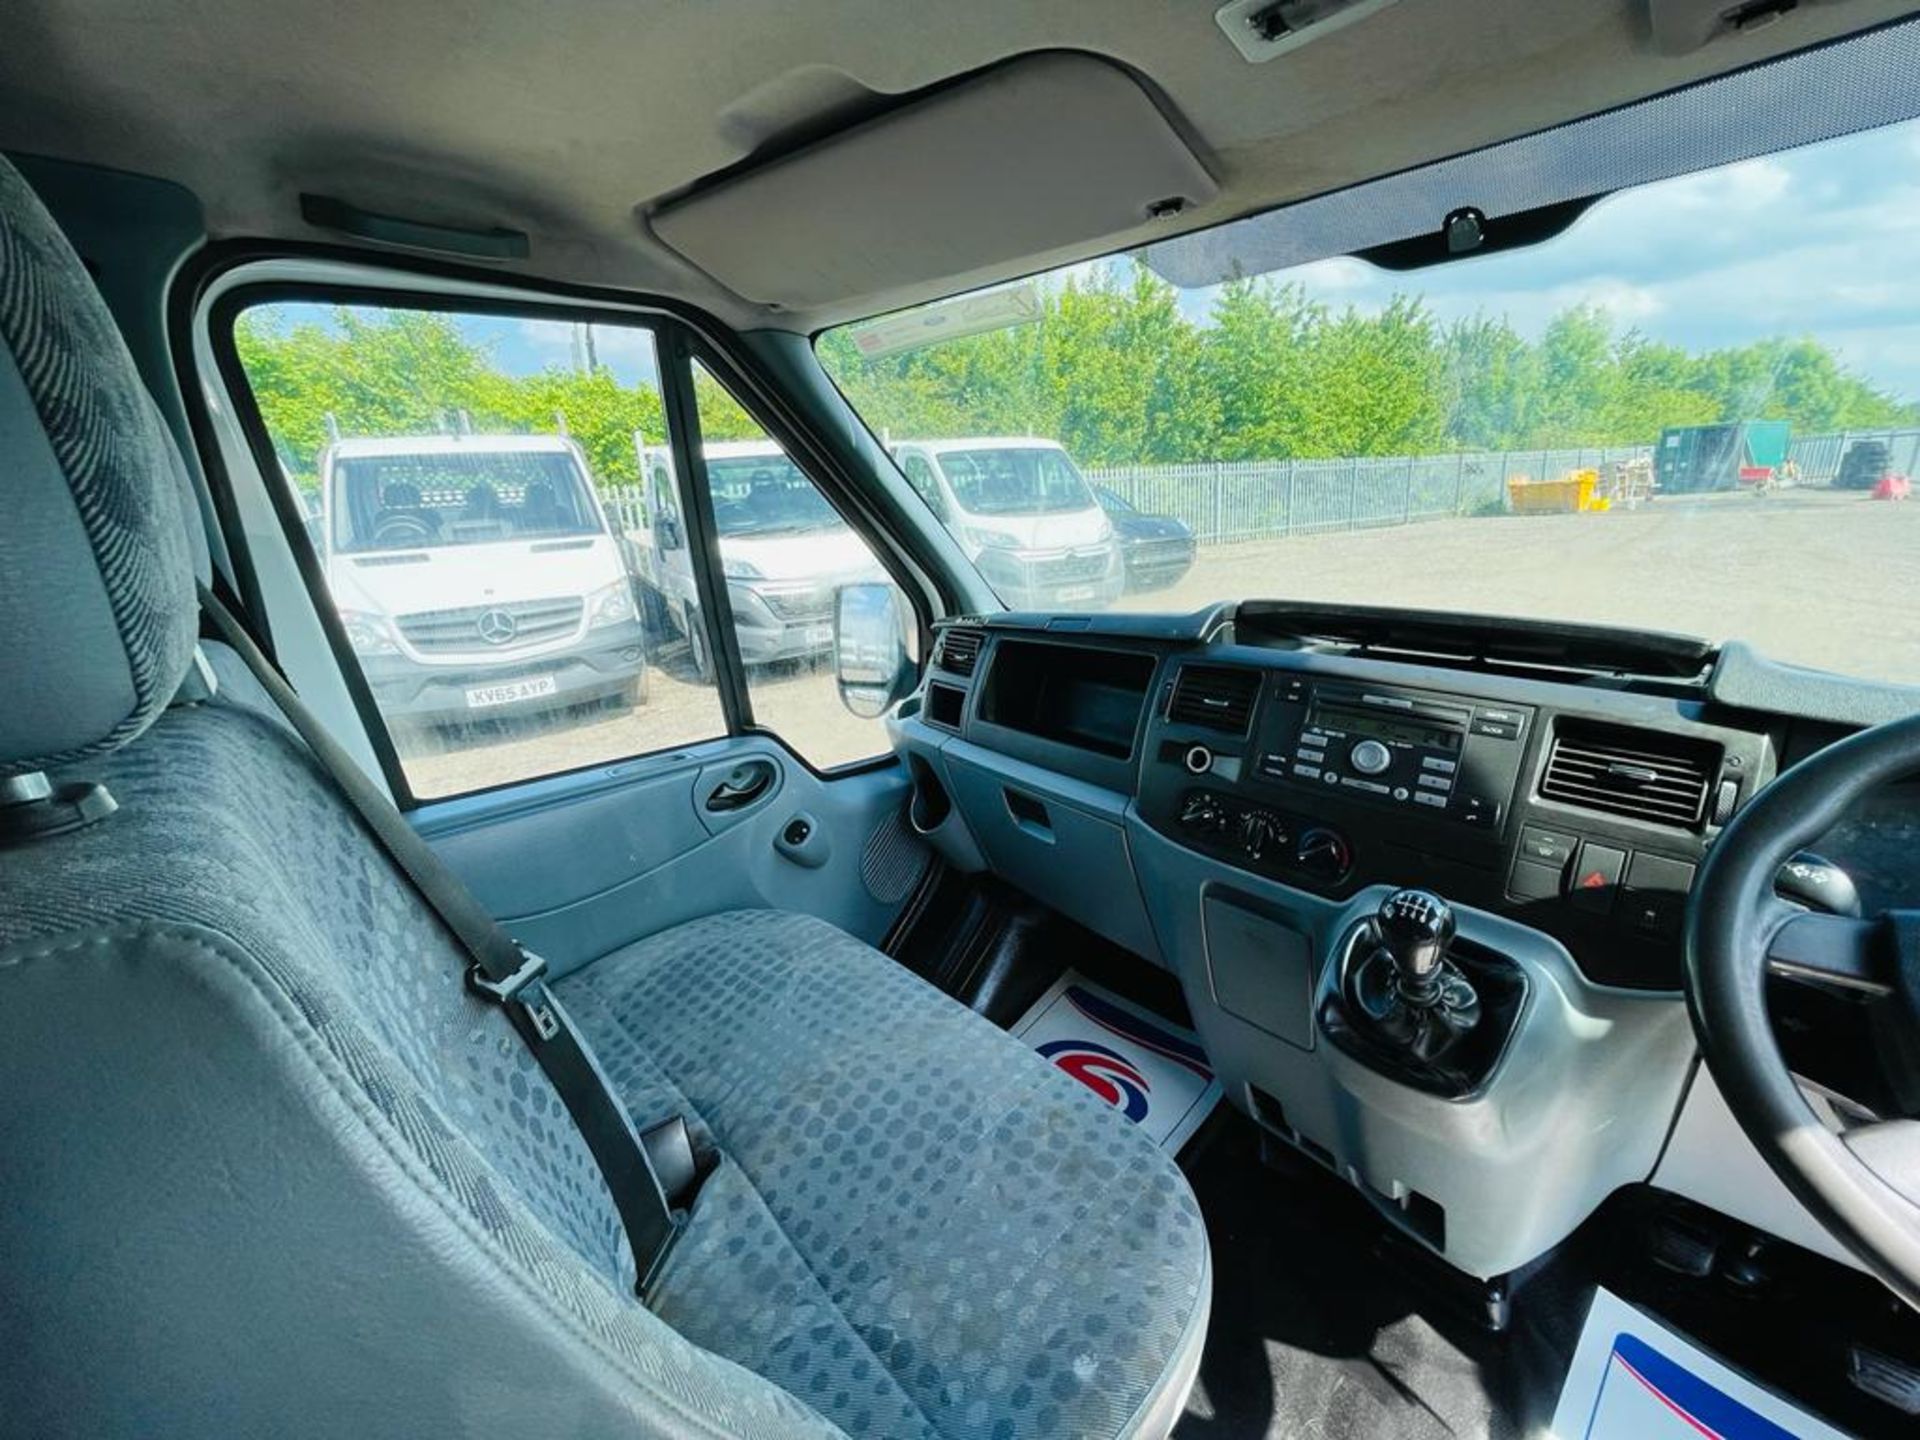 ** ON SALE ** Ford Transit 2.2 TDCI L1 H1 2012 ‘12 Reg’ Short wheel base - Panel Van - Image 16 of 24